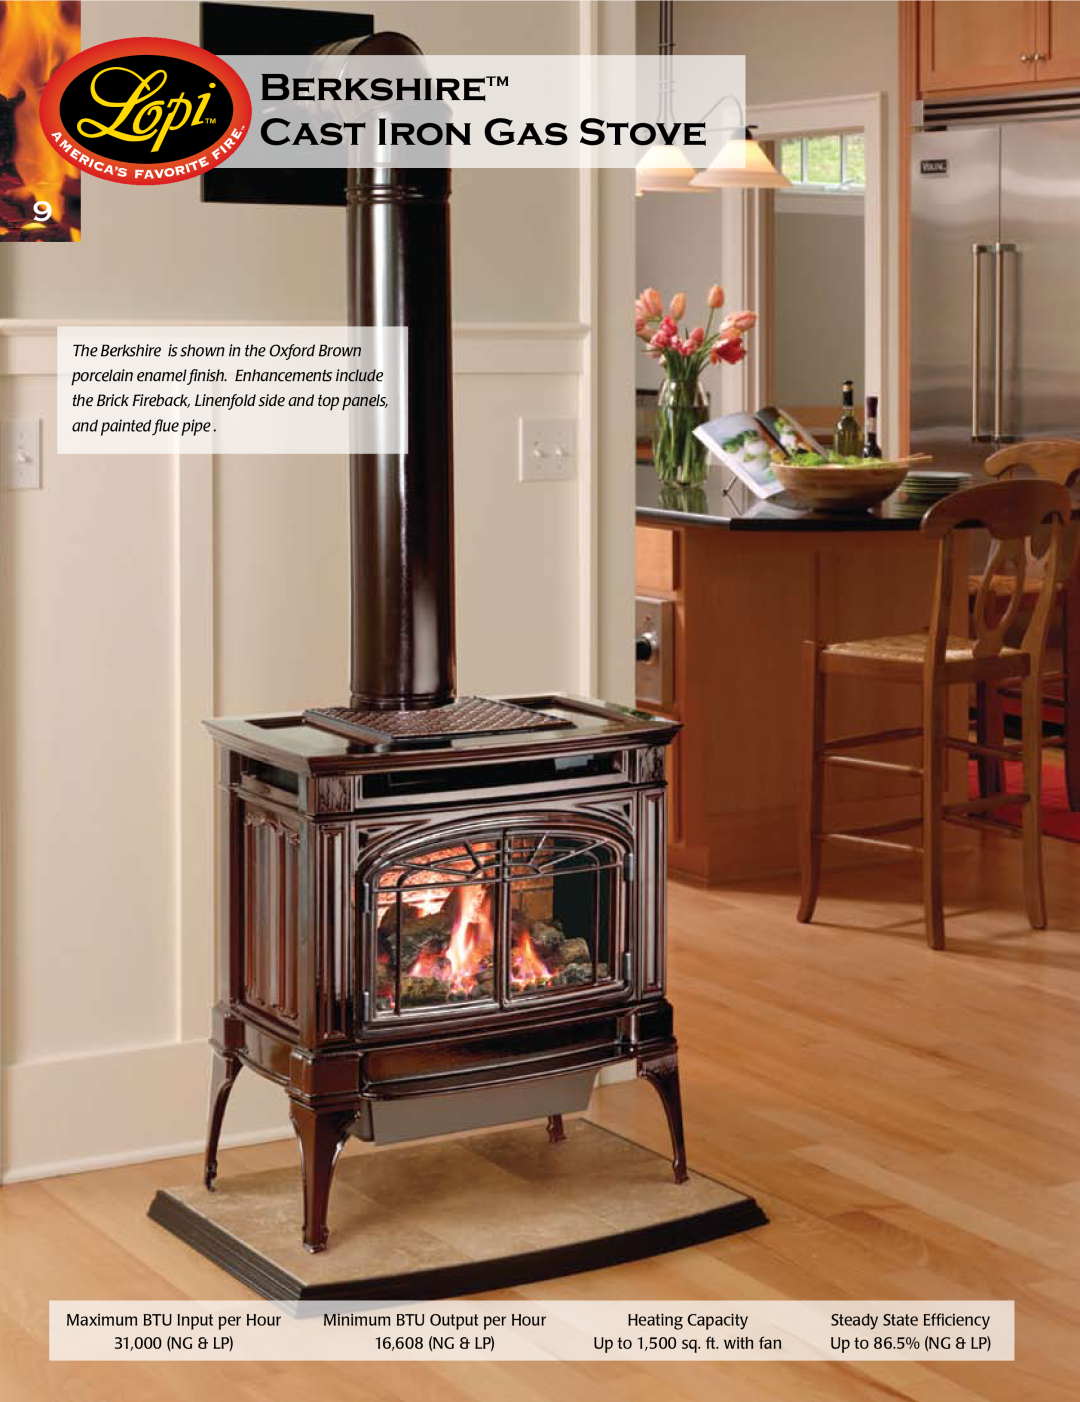 Lopi Gas Stove And Fireplace Berkshiretm Cast Iron Gas Stove, Maximum BTU Input per Hour, Minimum BTU Output per Hour 